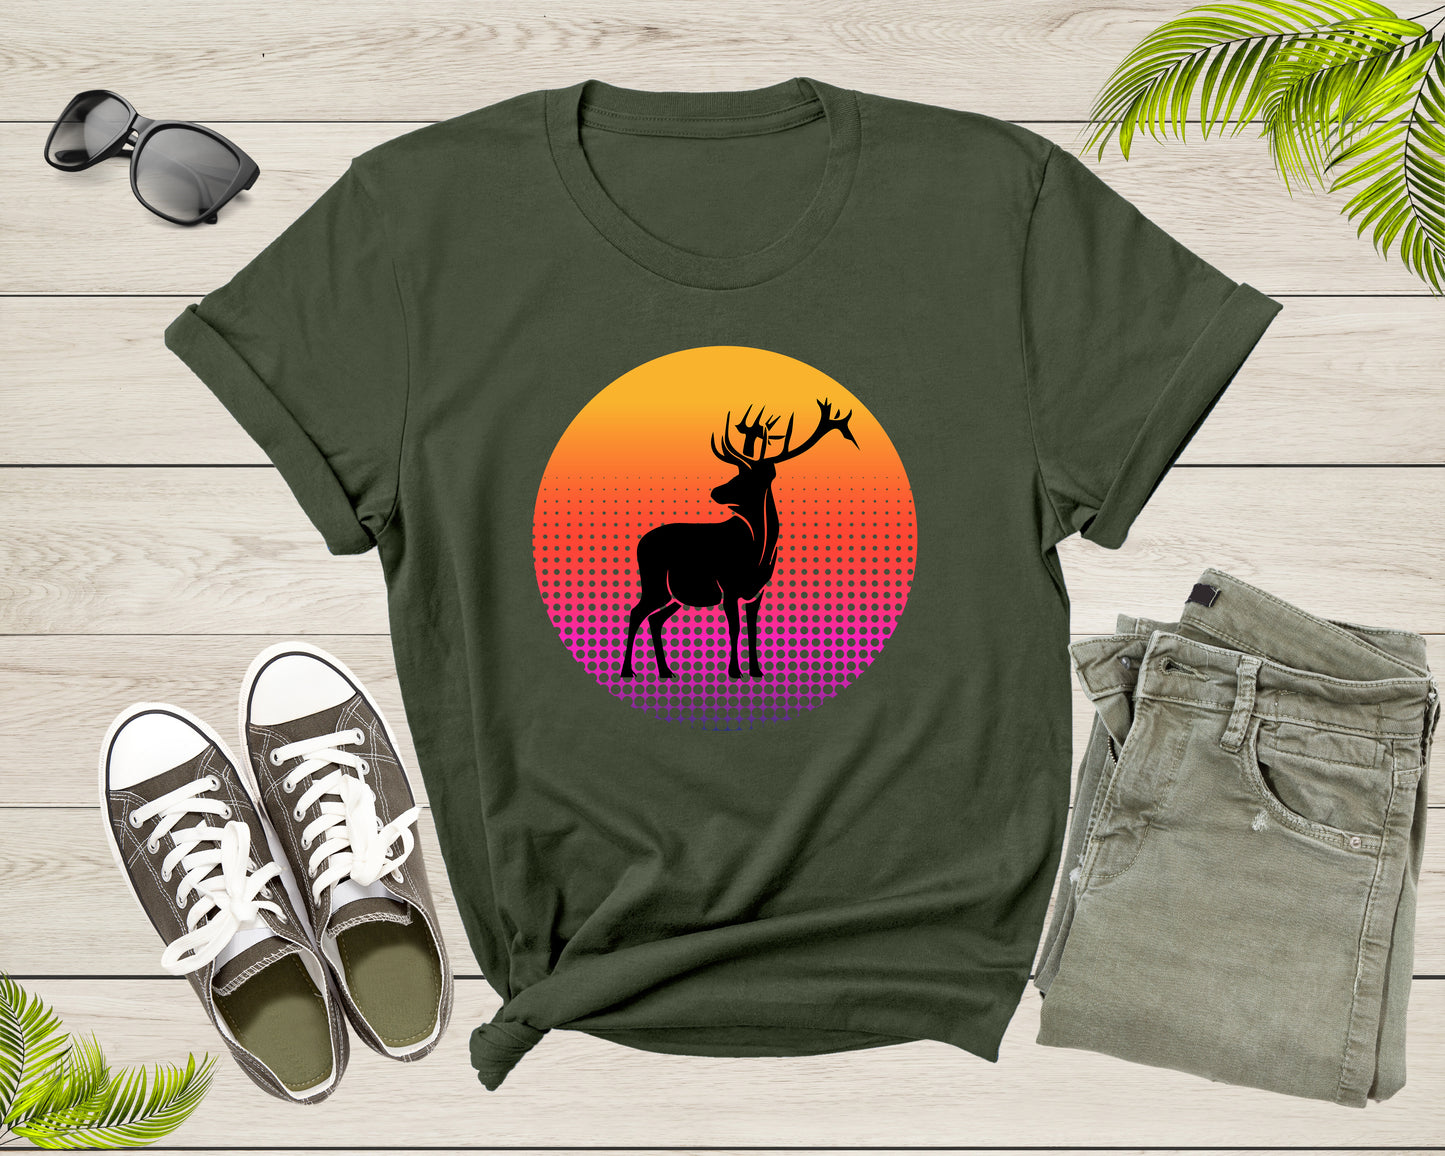 Xmas Deer Reindeer Elk Wild Animal Silhouette at Sunset T-Shirt Cool Christmas Lover Gift T Shirt for Men Women Boys Girls Teens Tshirt